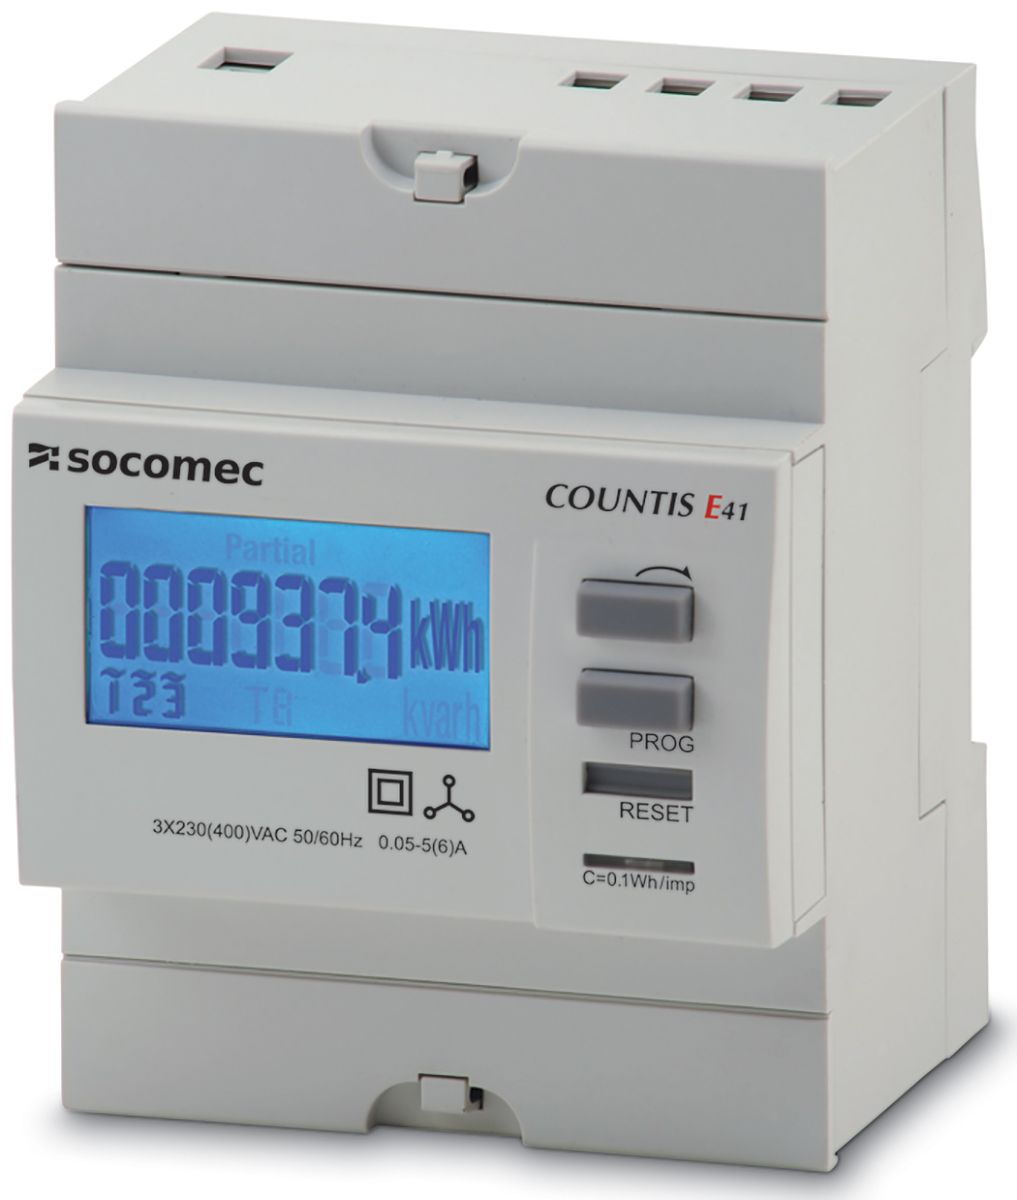 Socomec Countis E43 3 Phase Backlit LCD Energy Meter